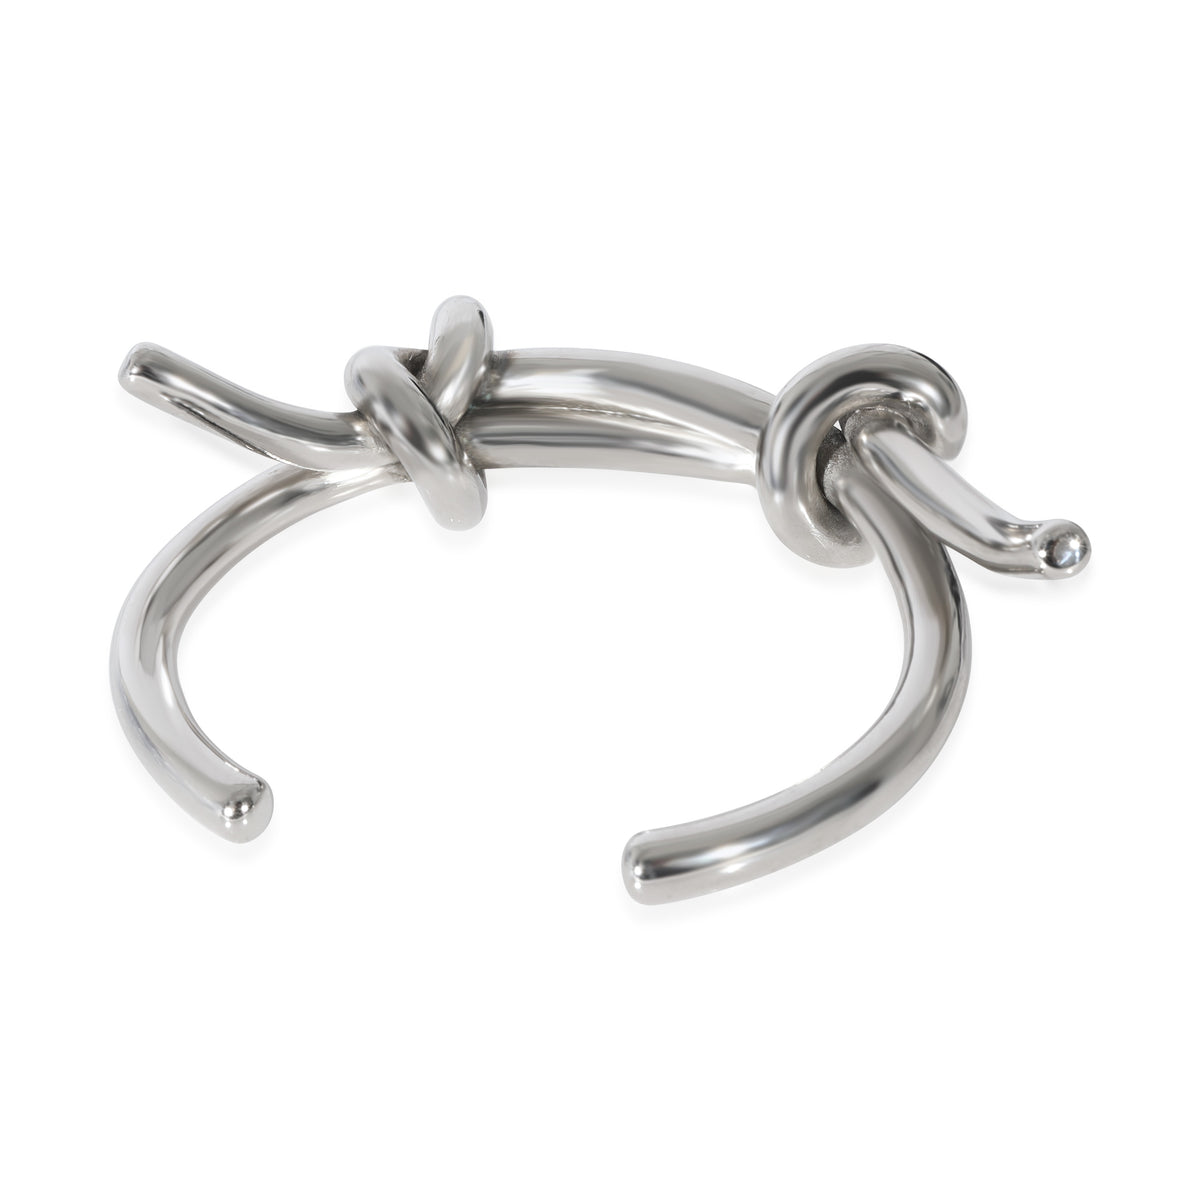 Balenciaga Dual Knot Cuff Bracelet